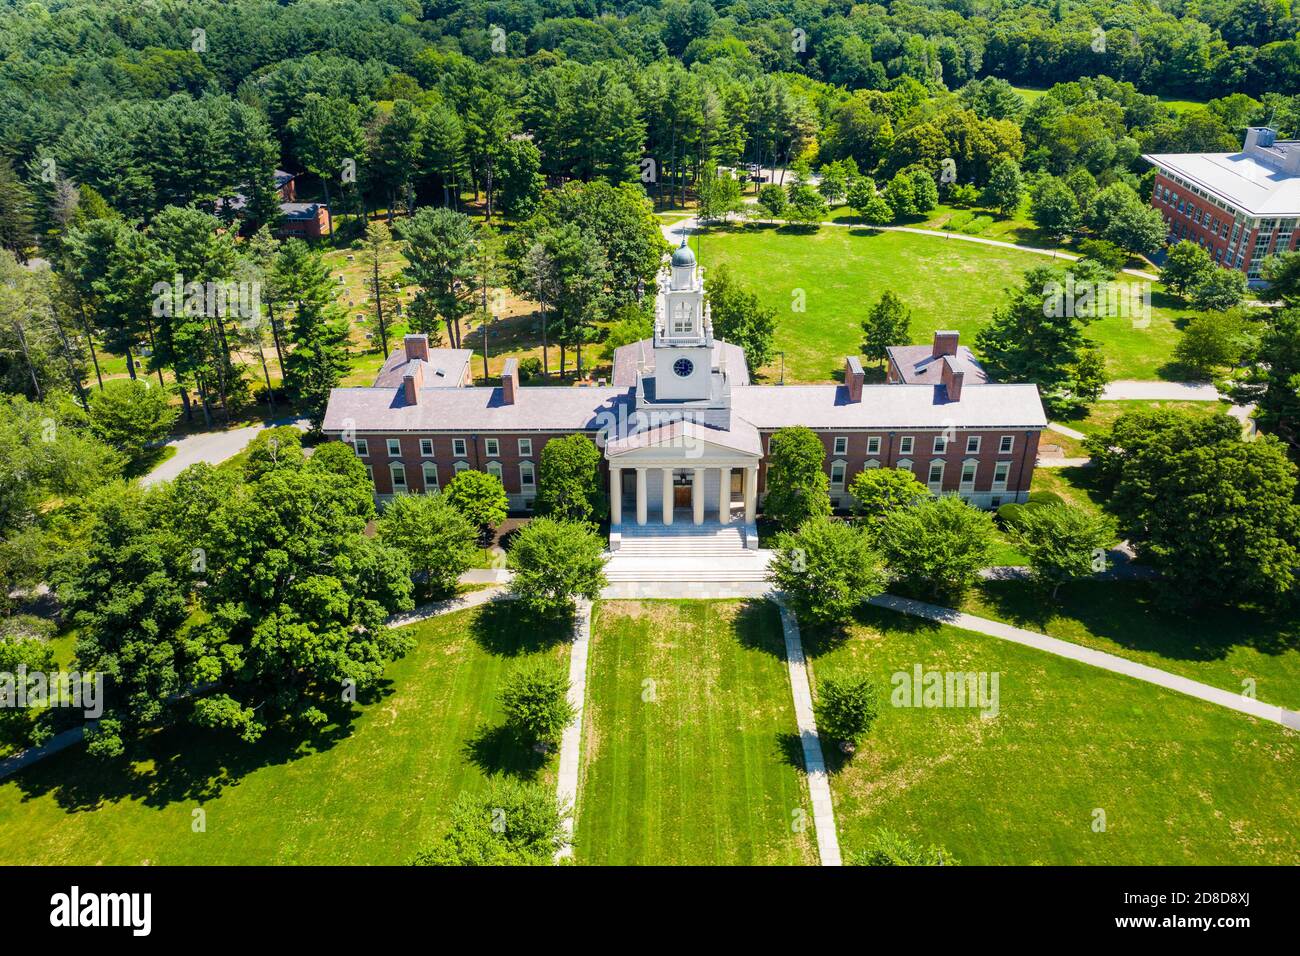 Samuel Phillips Hall, Phillips Academy — Andover, Andover, Massachusetts, USA Stock Photo